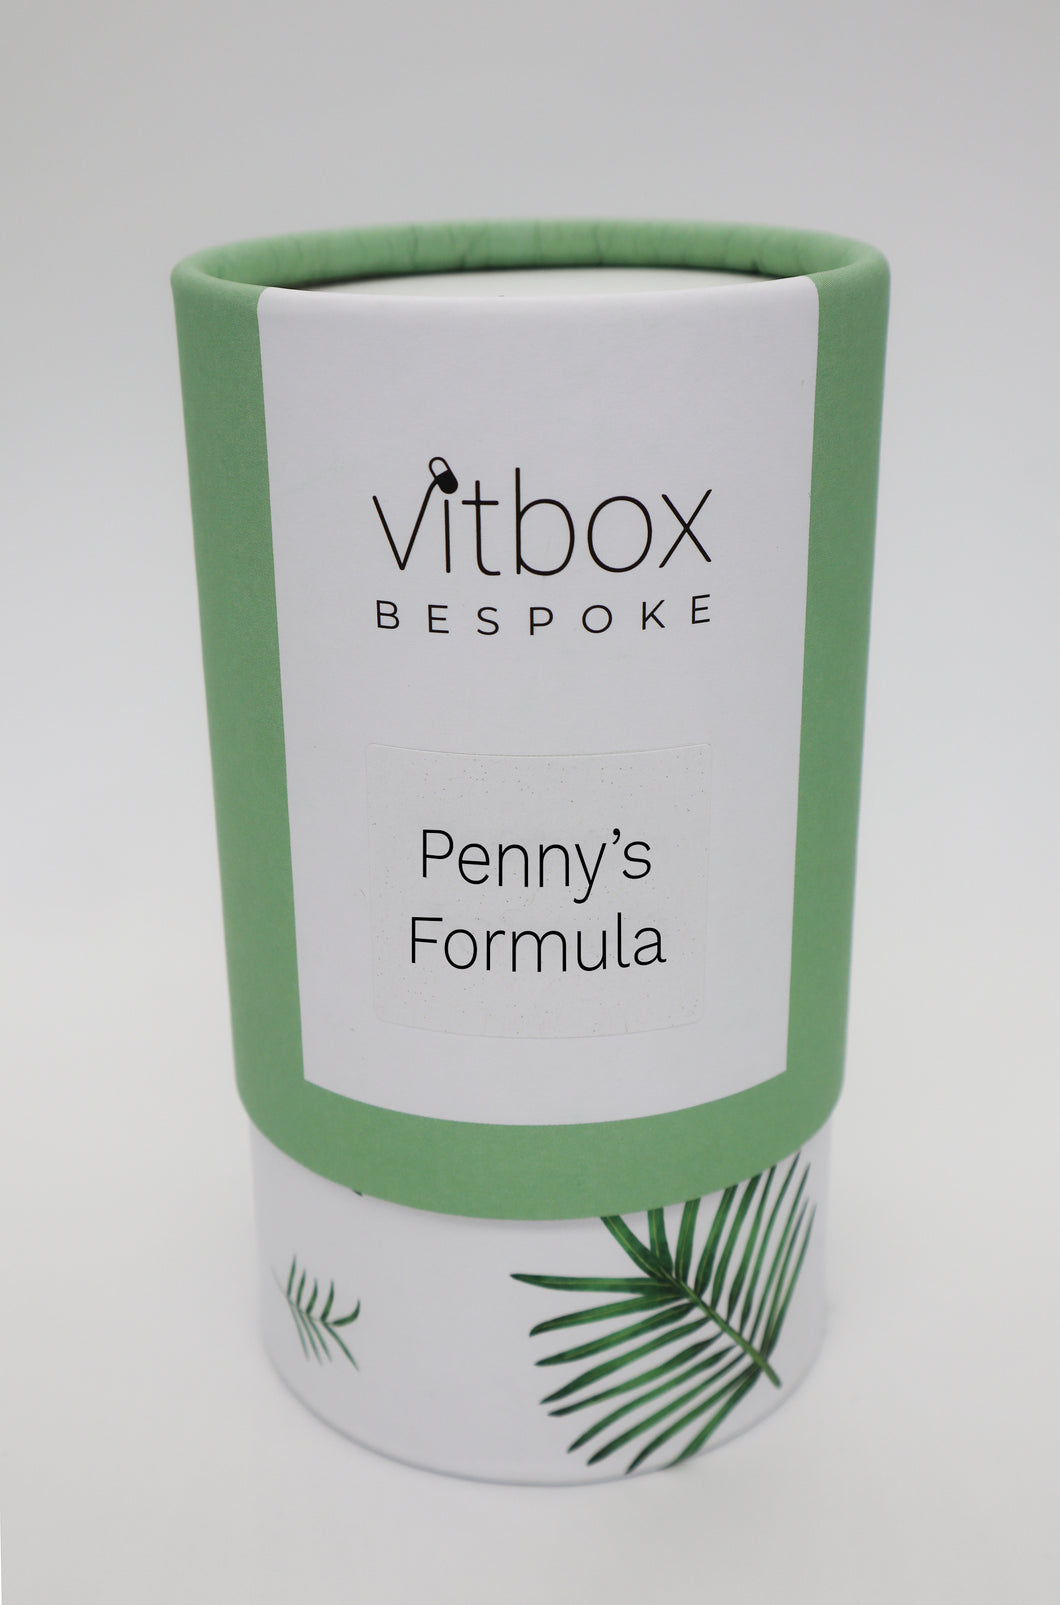 Penny's Vitbox Bespoke